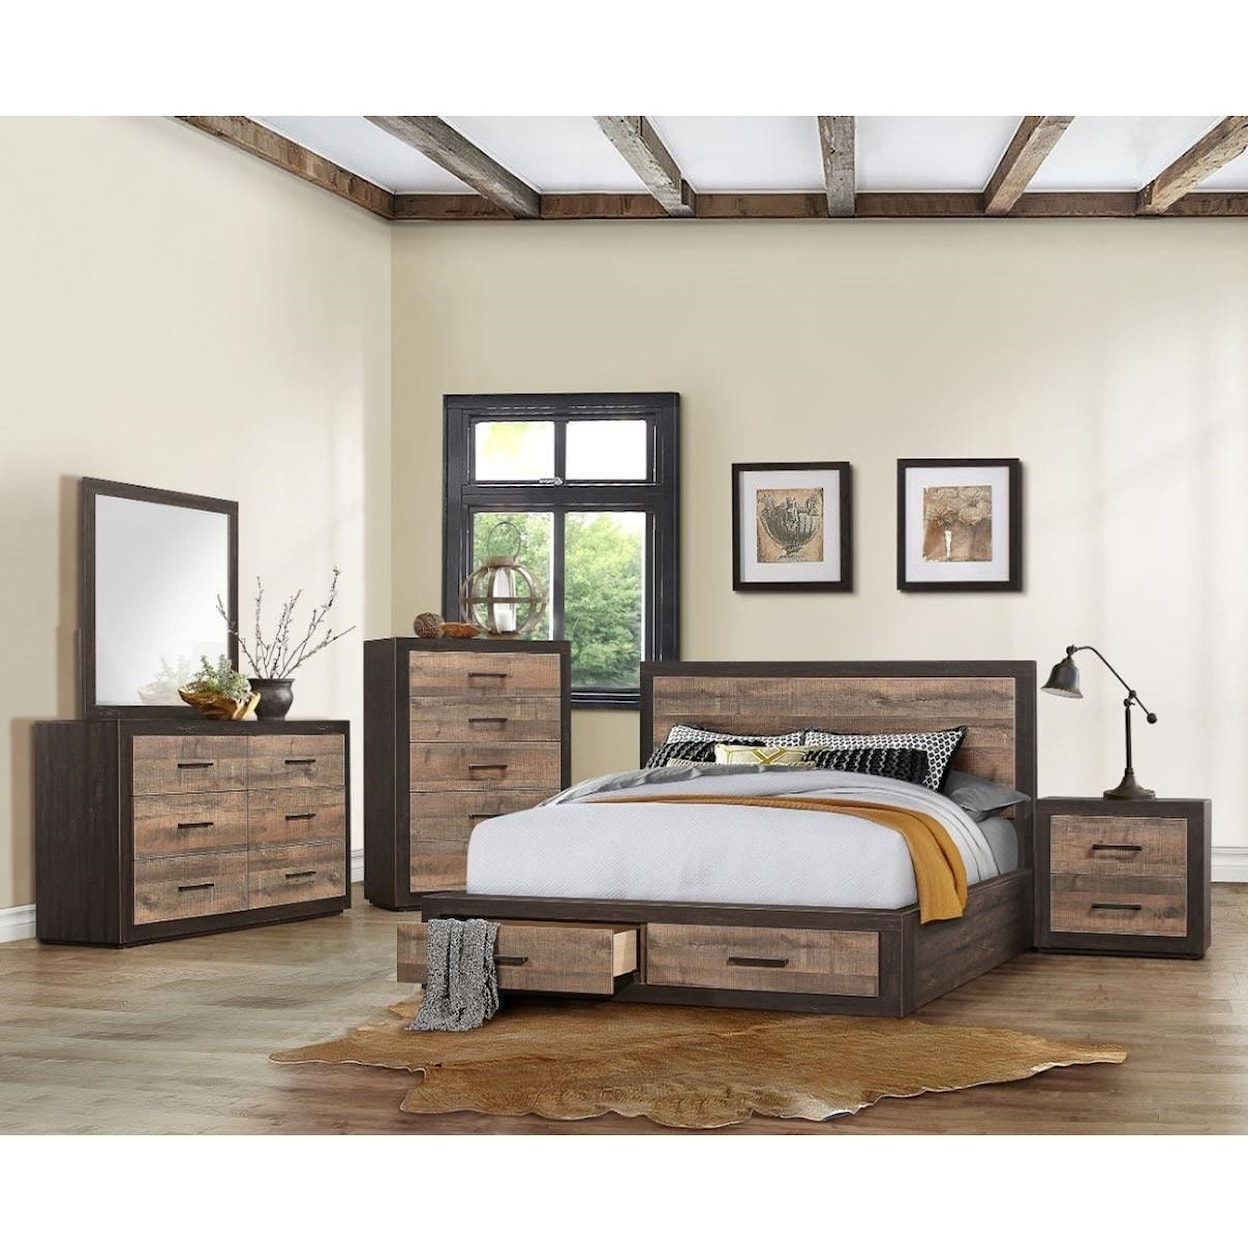 Homelegance Furniture Miter Queen Bedroom Group